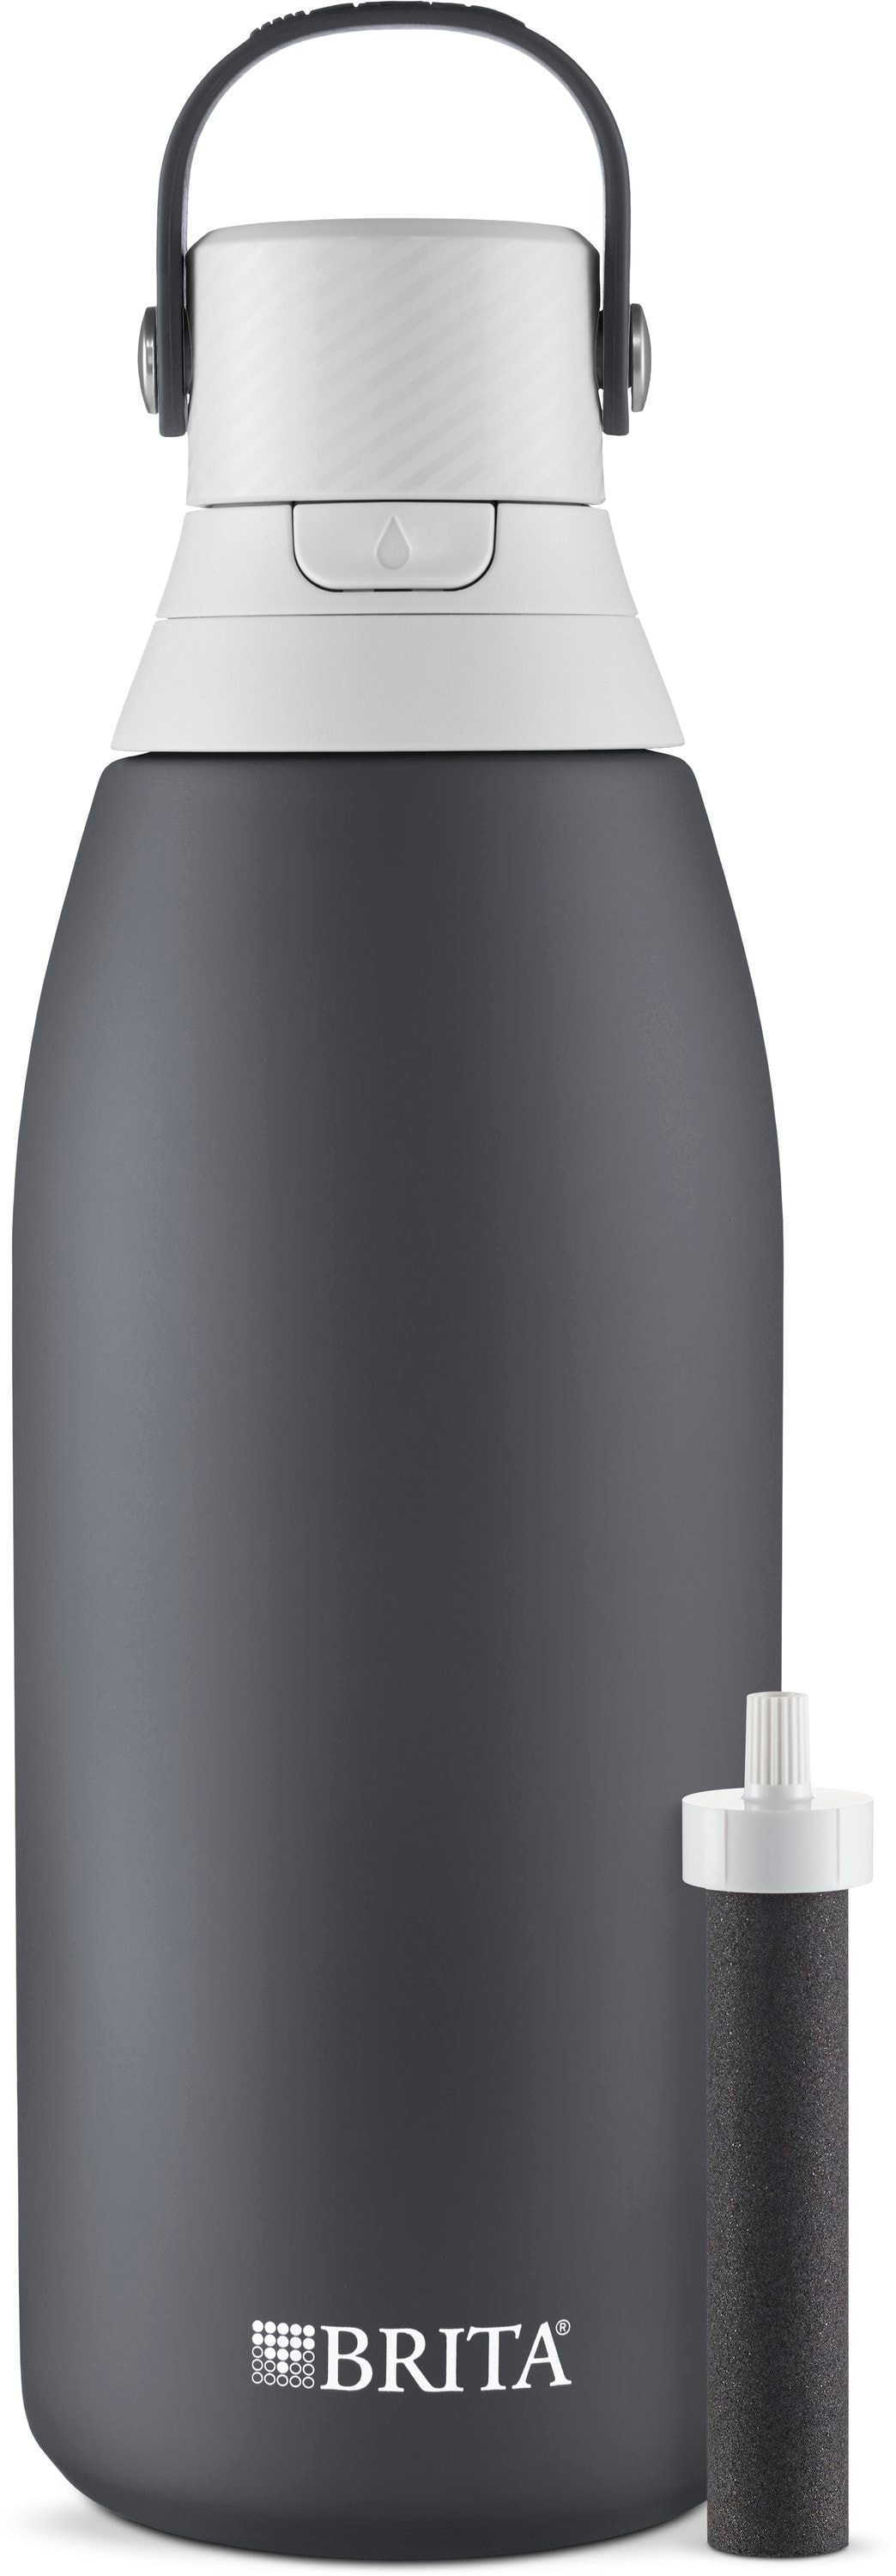 Rubbermaid Essentials 32oz gray Plastic Water Bottle Chug 4 pack